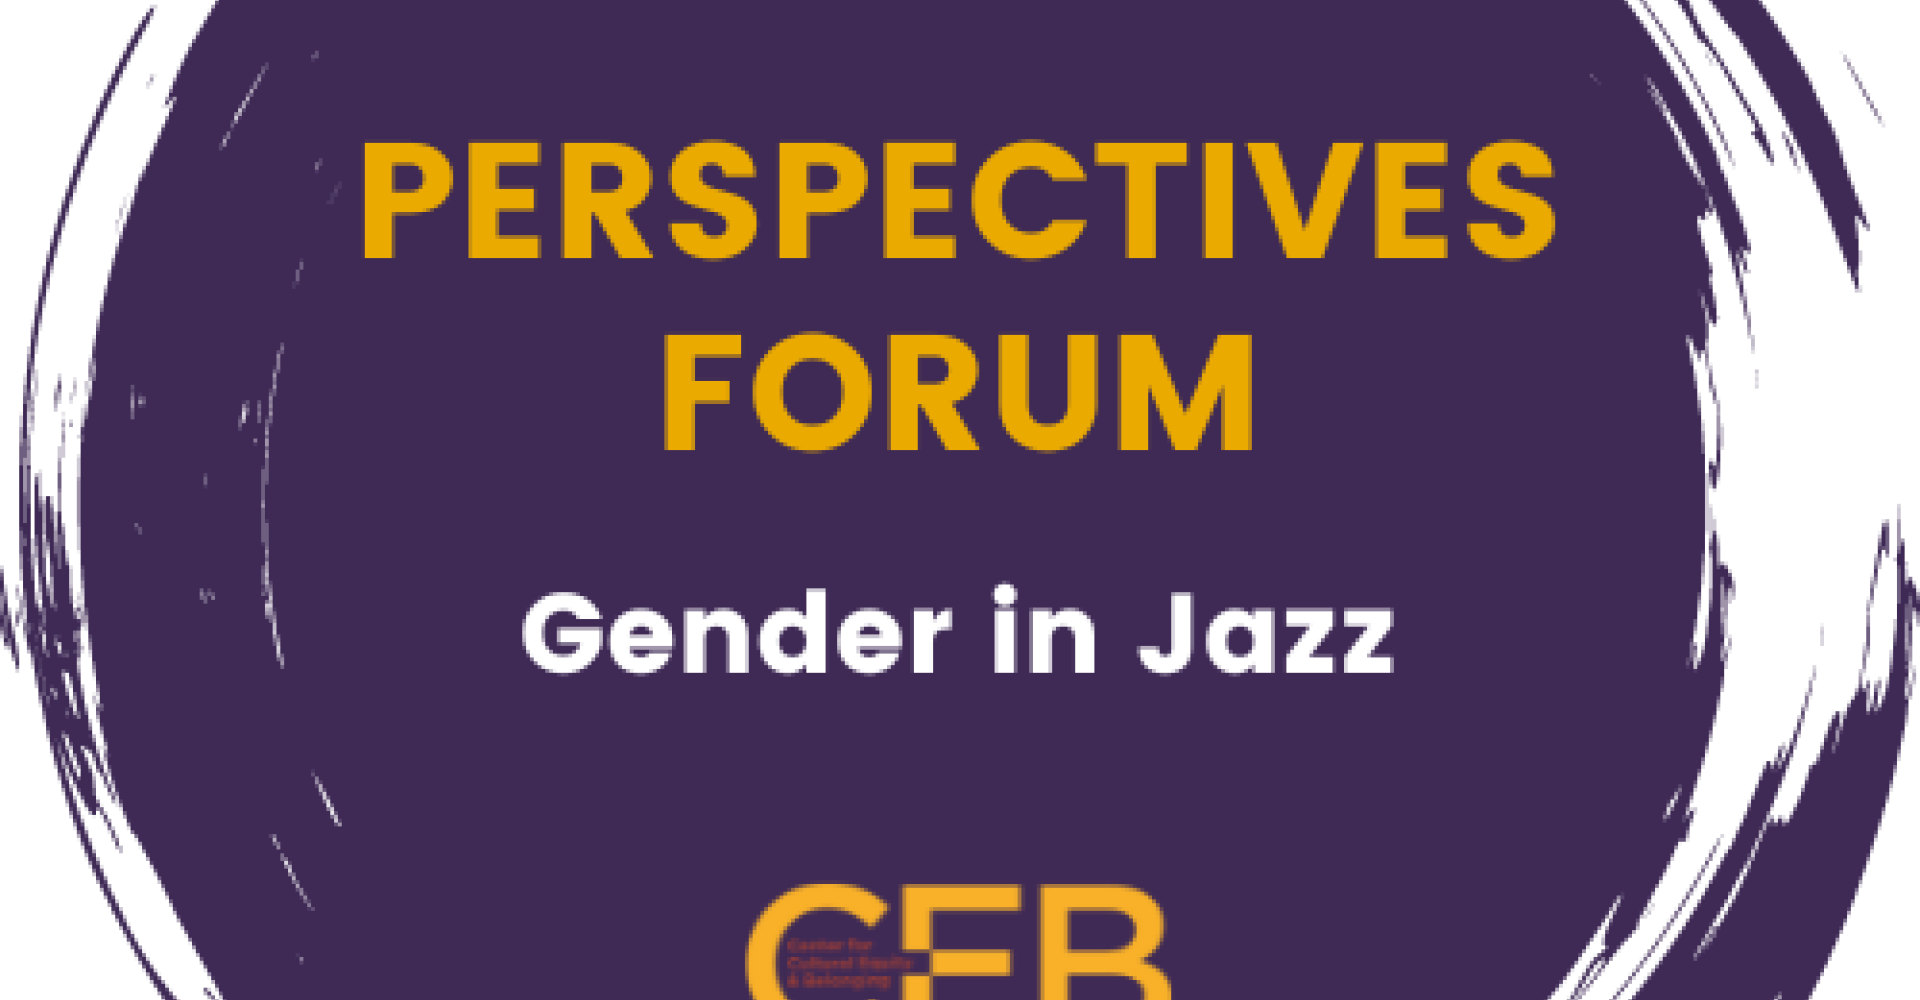 Gender in Jazz Forum